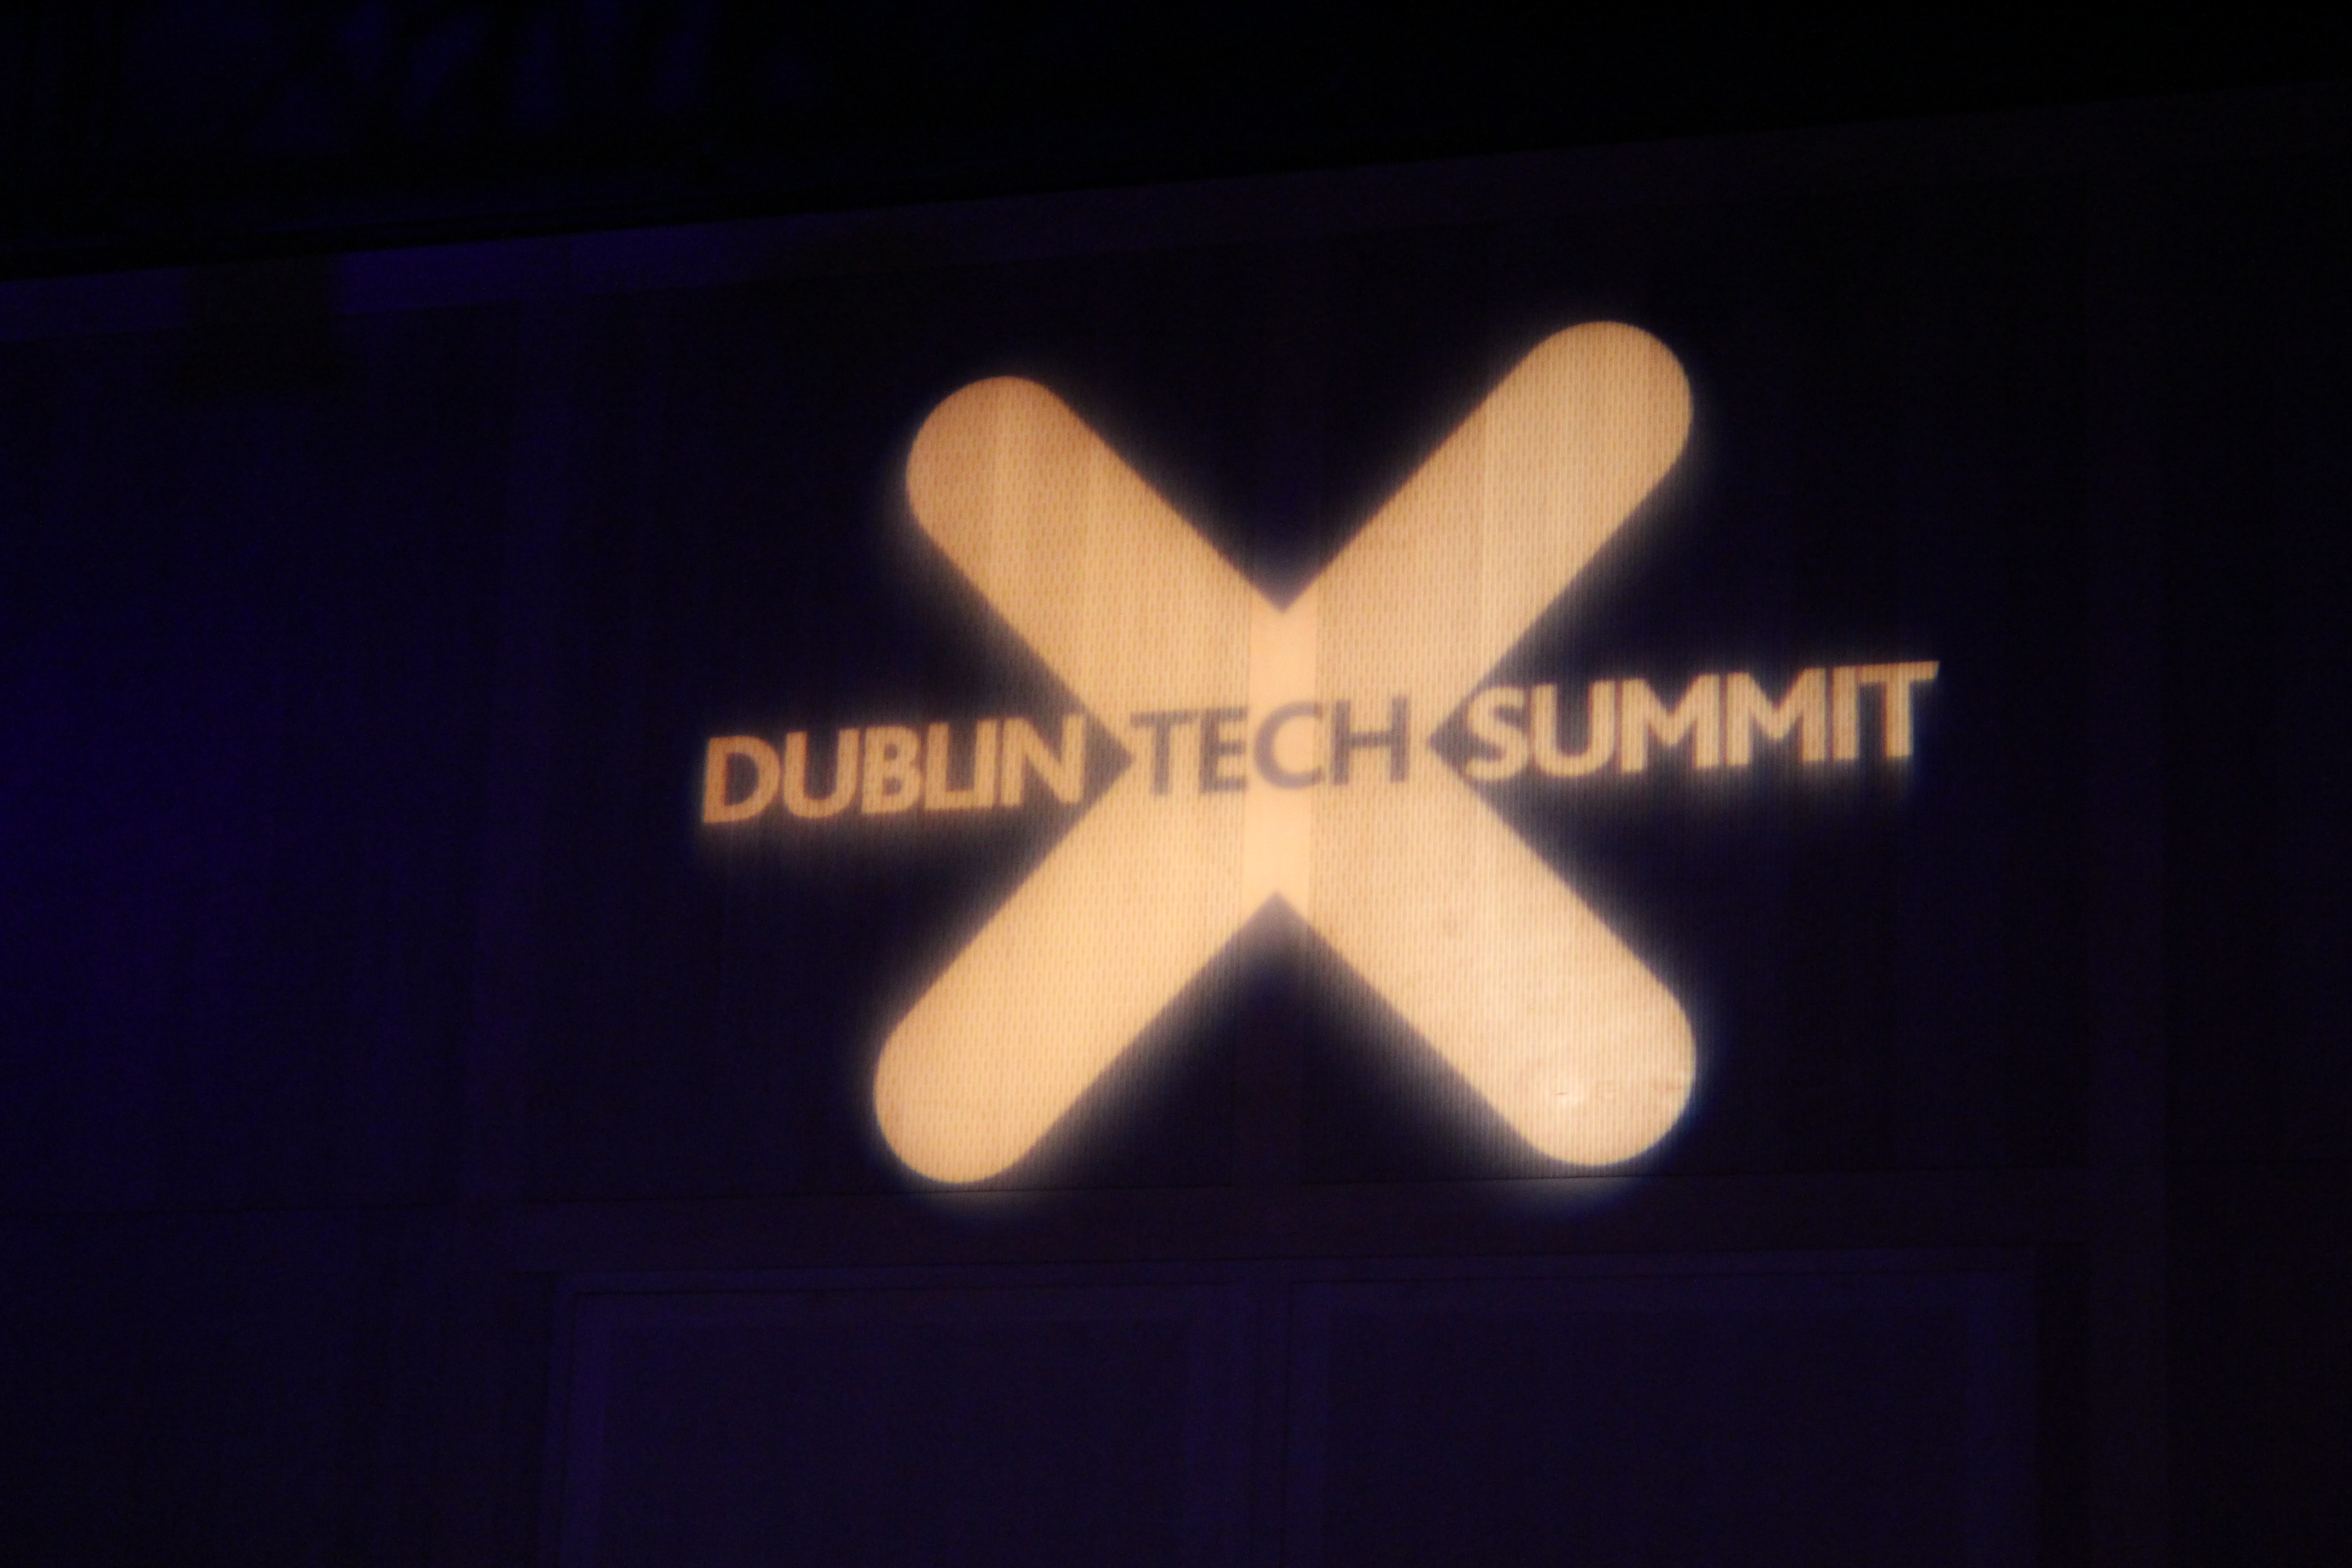 Dublin tech summit logo